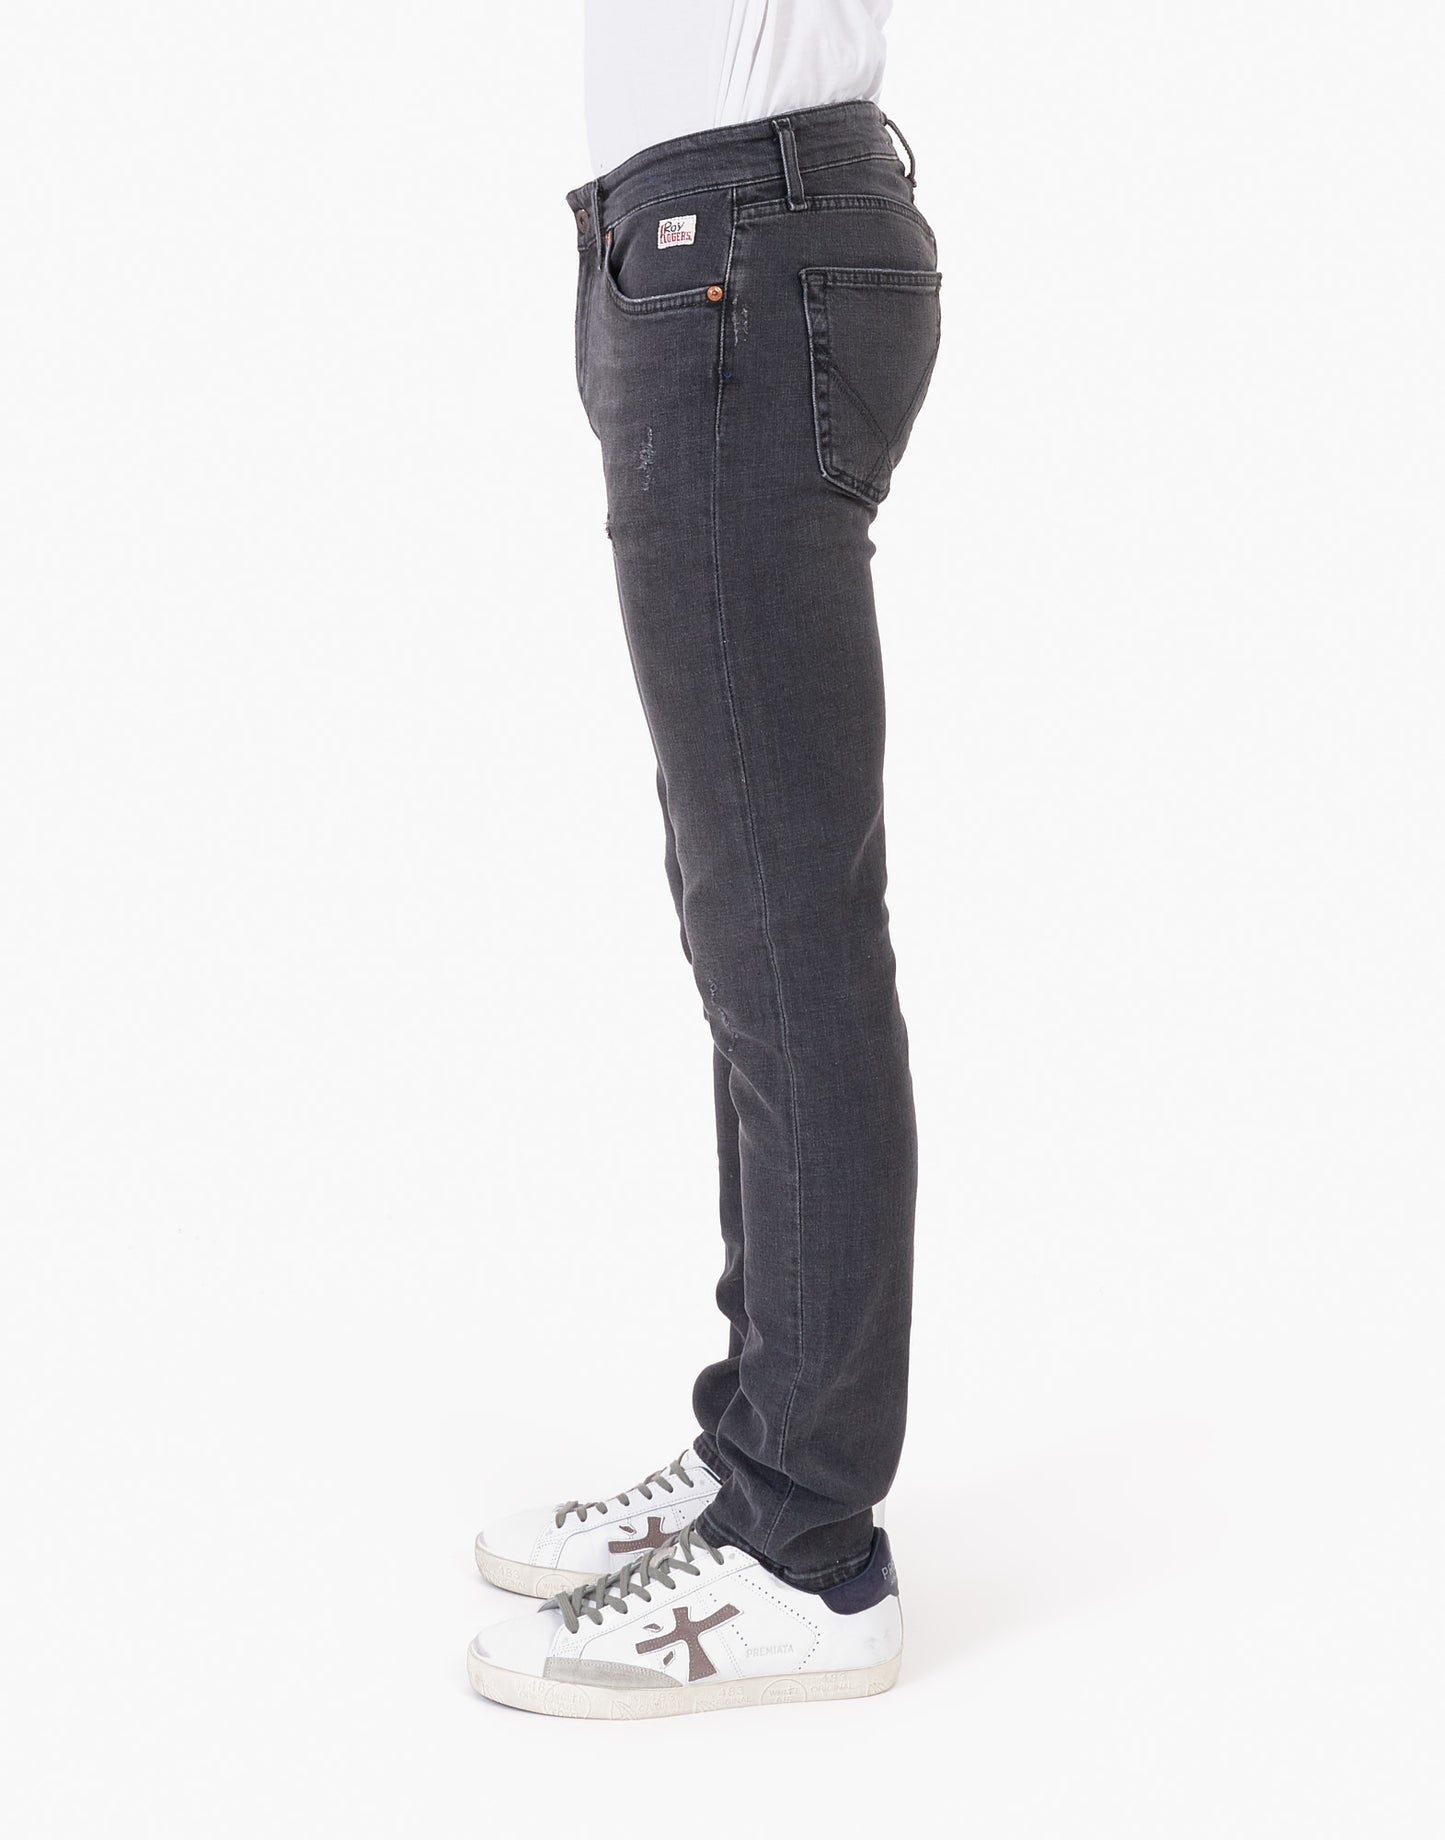 Jeans ROY ROGER'S 5 tasche
Nero